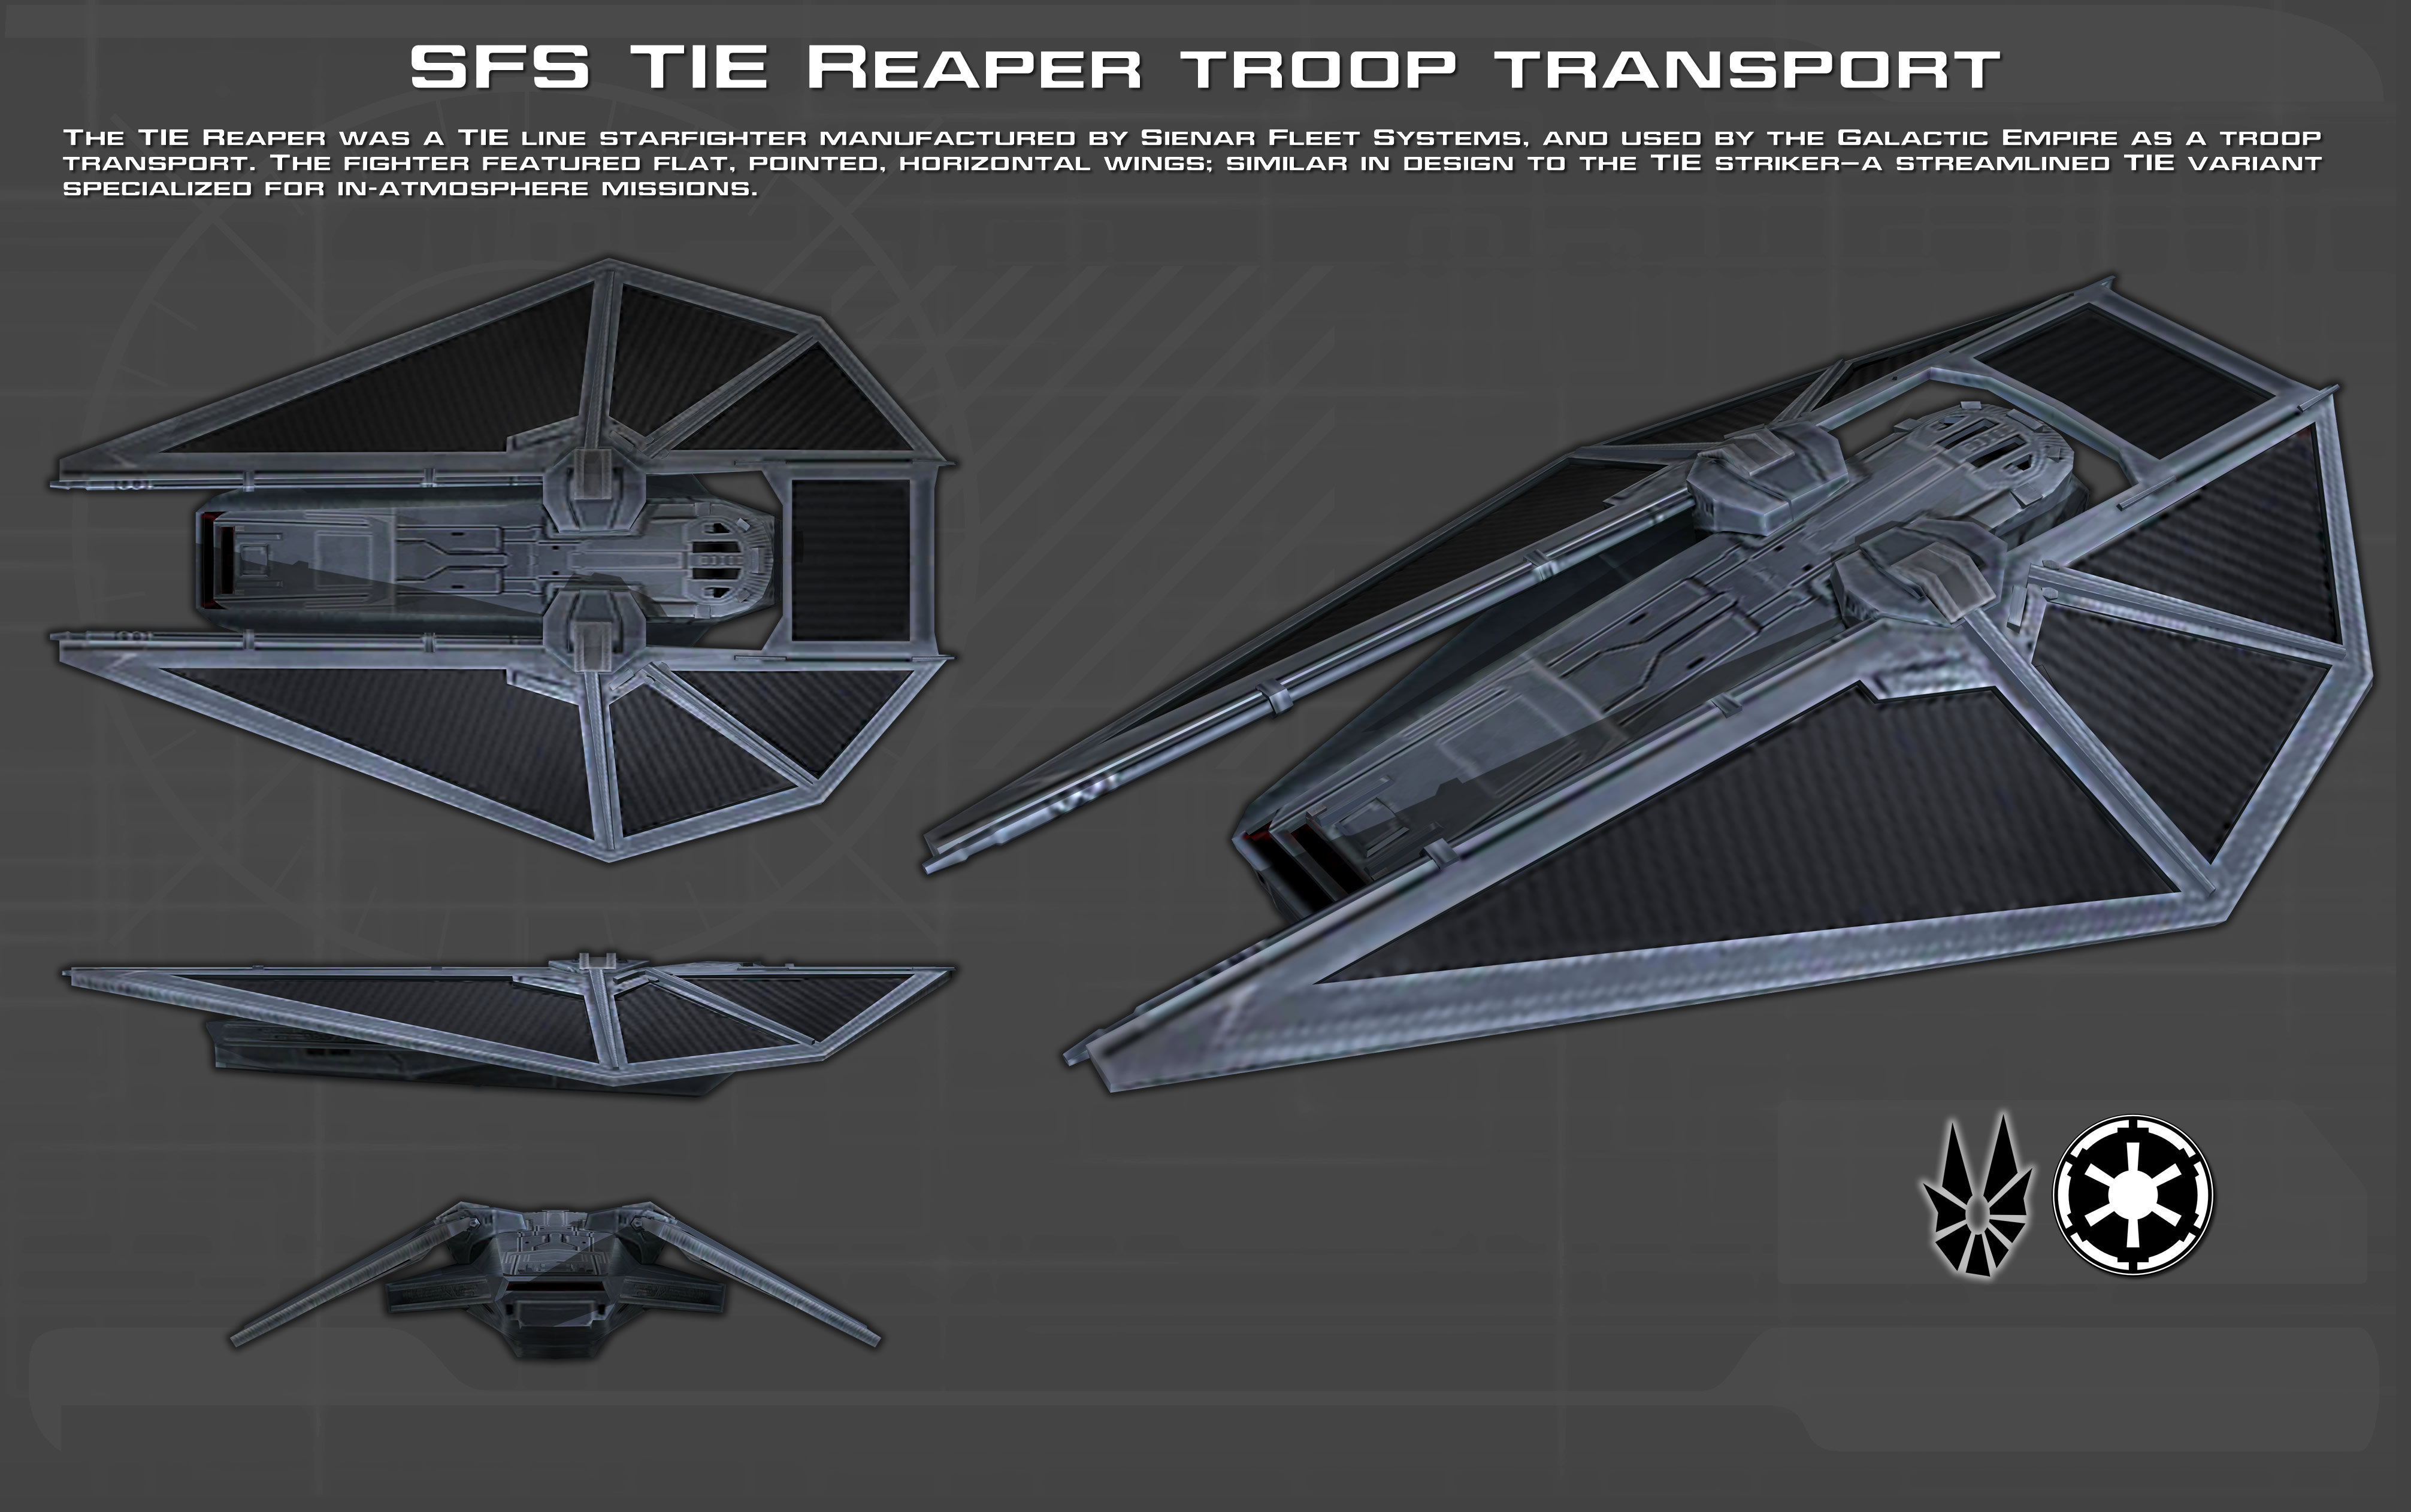 sfs_tie_reaper_troop_transport_ortho__new__by_unusualsuspex-daxaum5.jpg